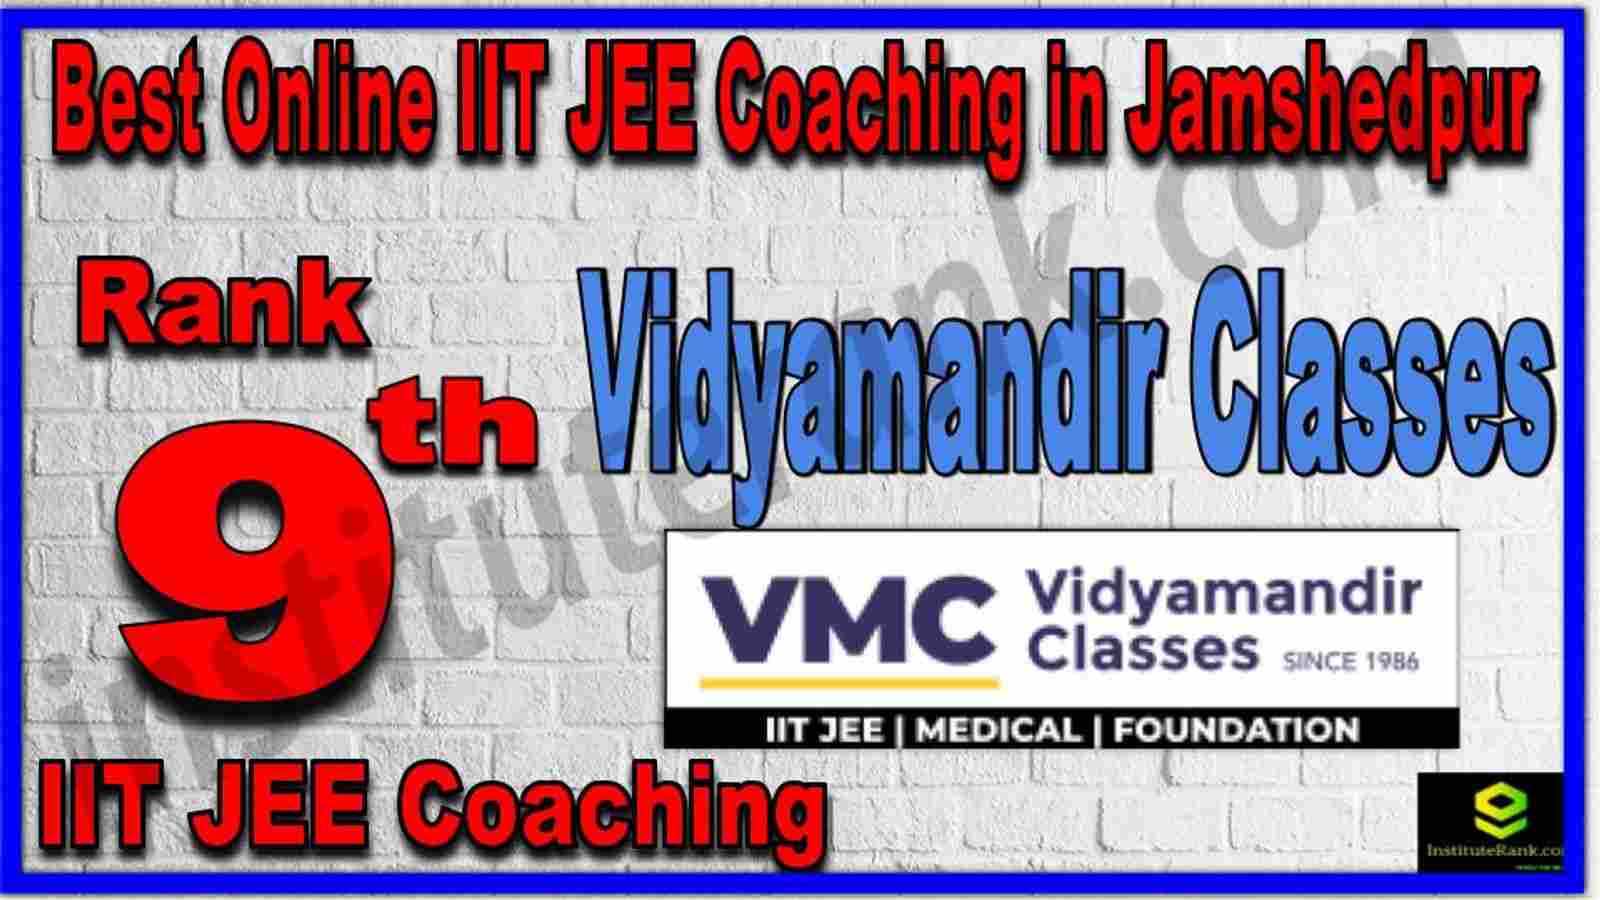 Rank 9th Best Online IIT JEE Coaching in Jamshedpur